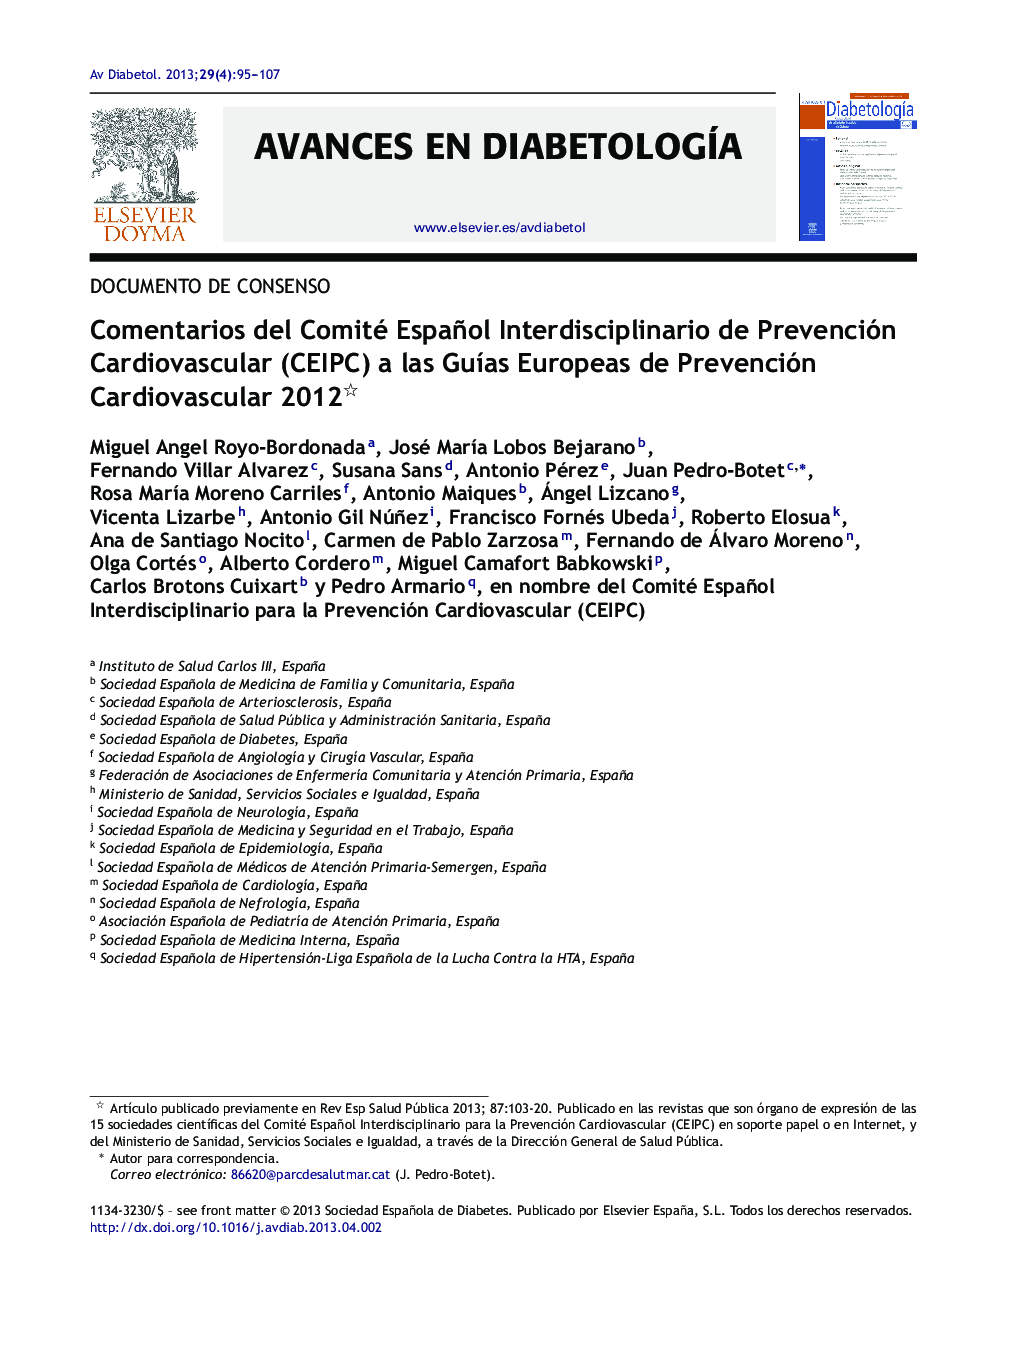 Comentarios del Comité Español Interdisciplinario de Prevención Cardiovascular (CEIPC) a las GuÃ­as Europeas de Prevención Cardiovascular 2012